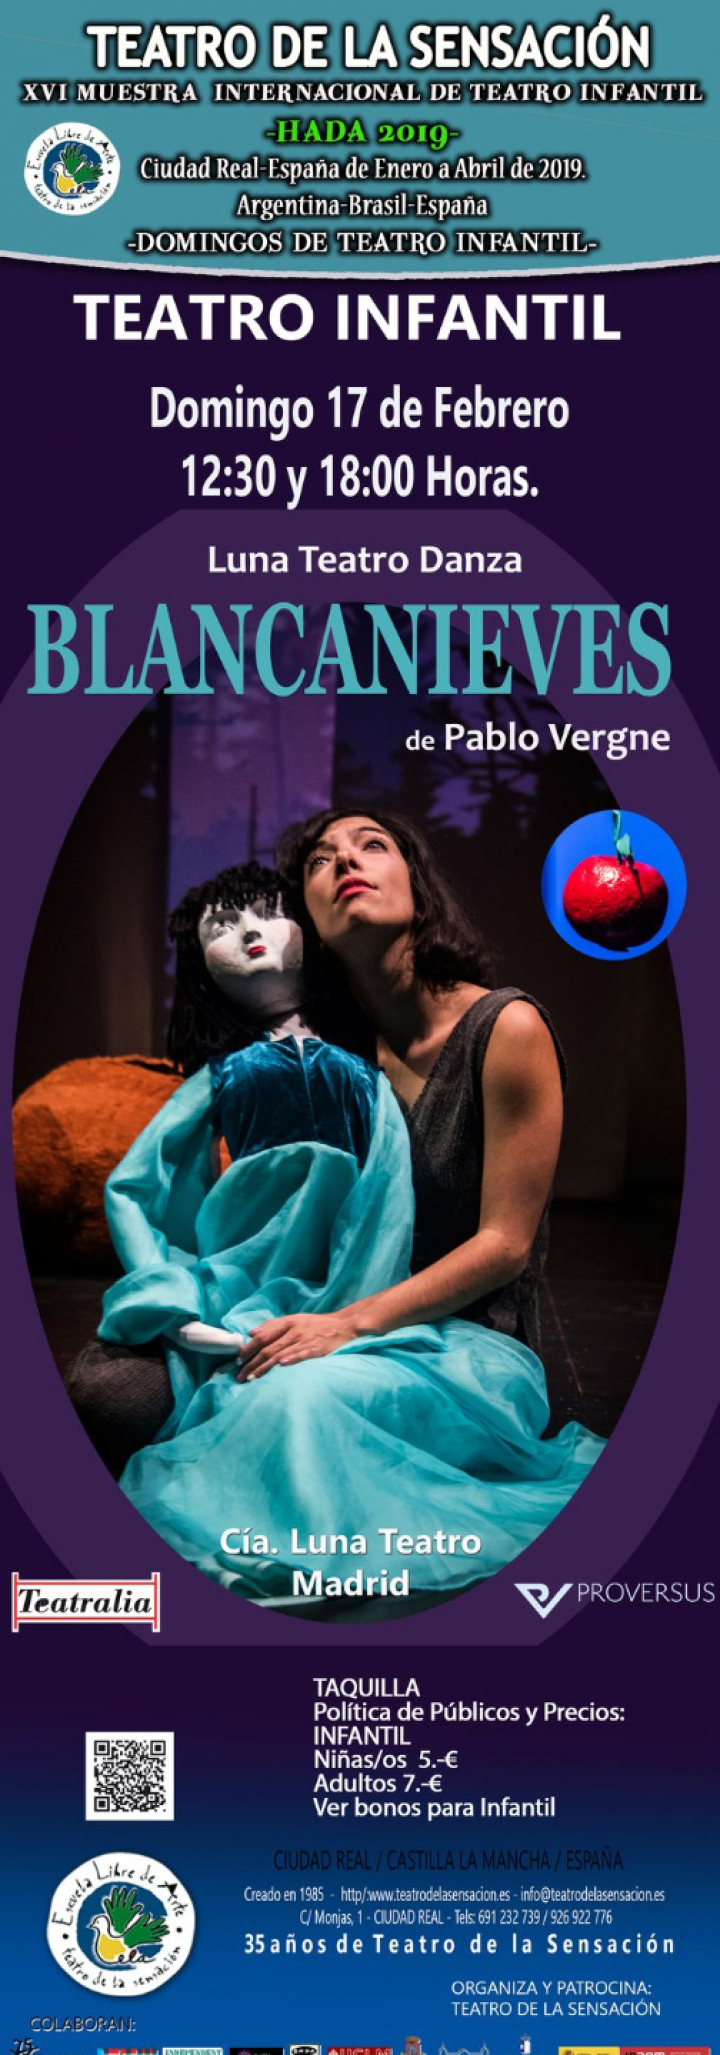 TEATRO INFANTIL “Blancanieves” Cía. Luna Teatro Madrid